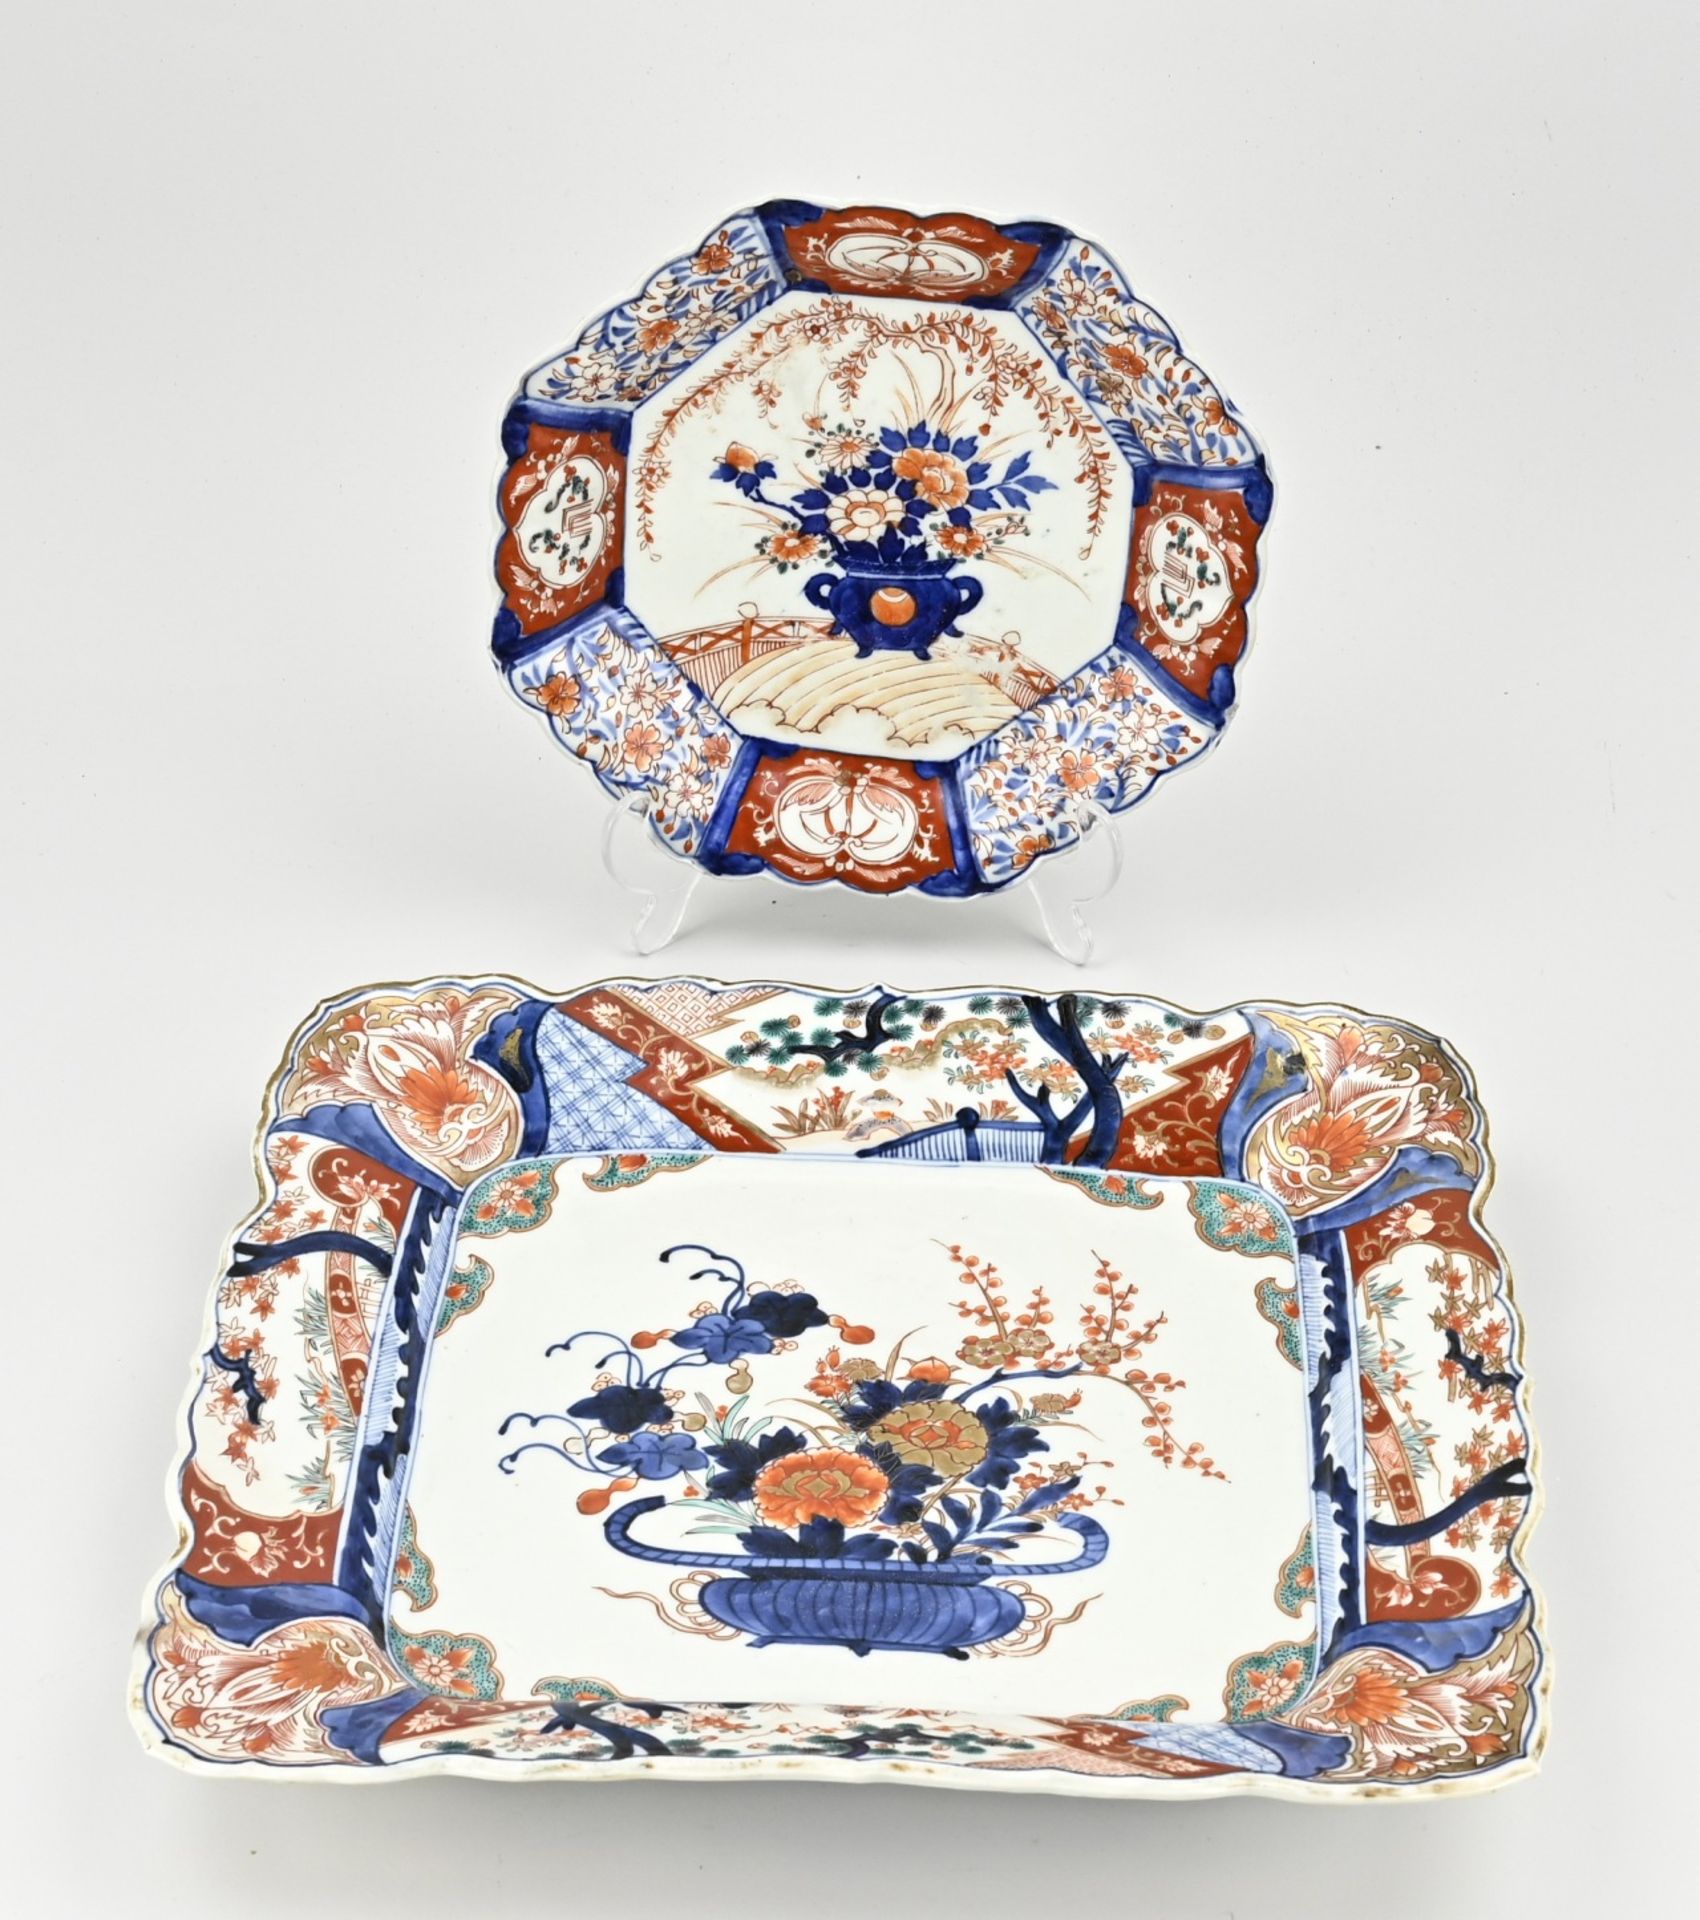 Two parts of Japanese Imari porcelain